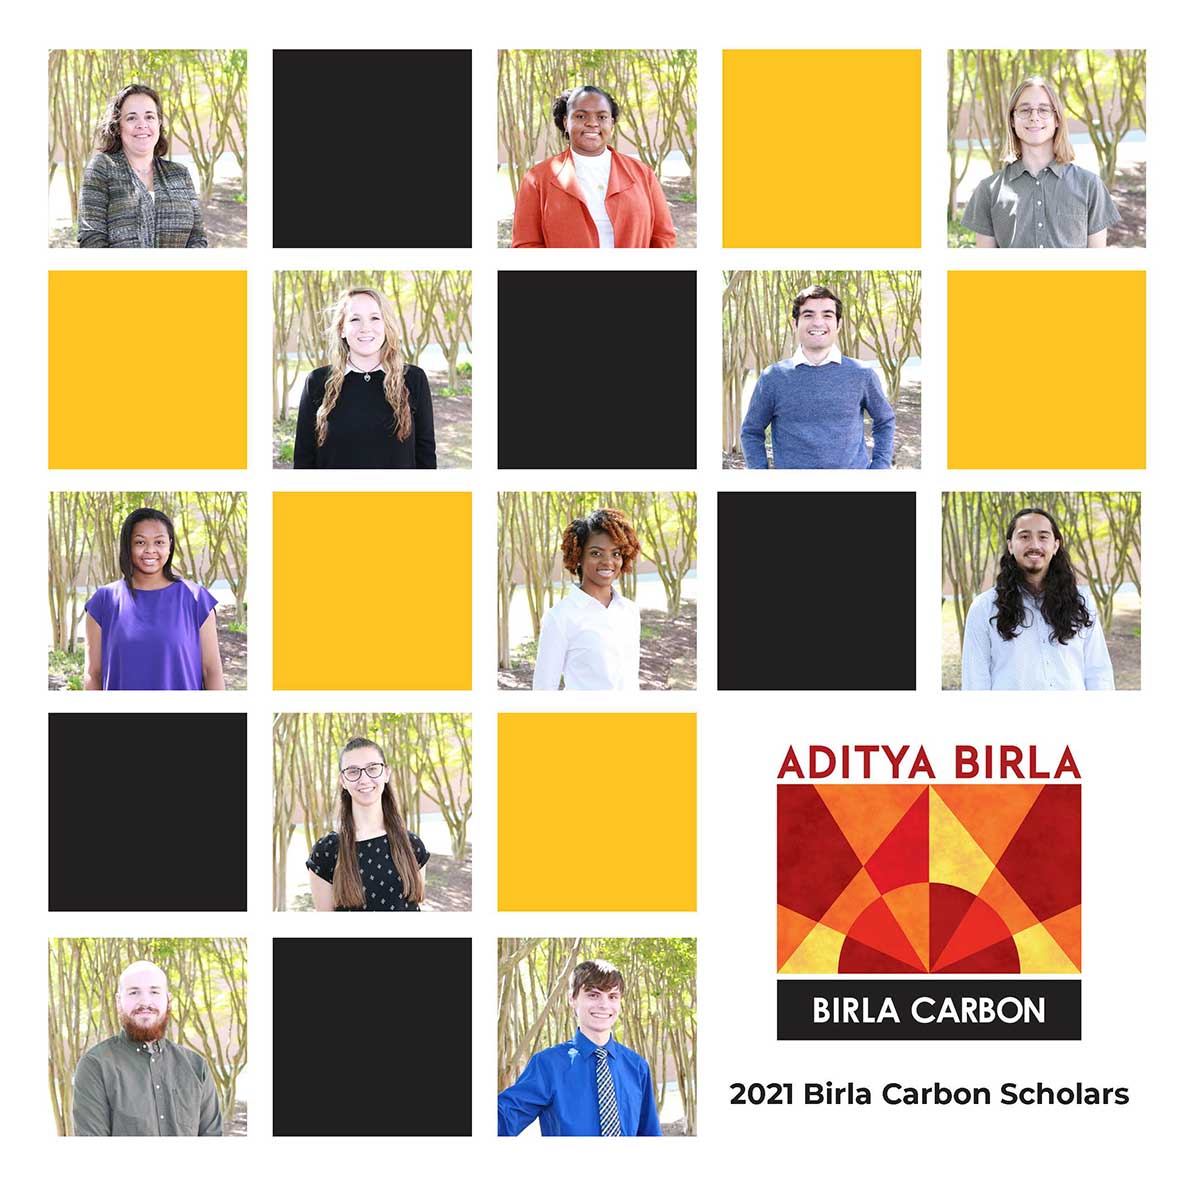 birla carbon students 2021